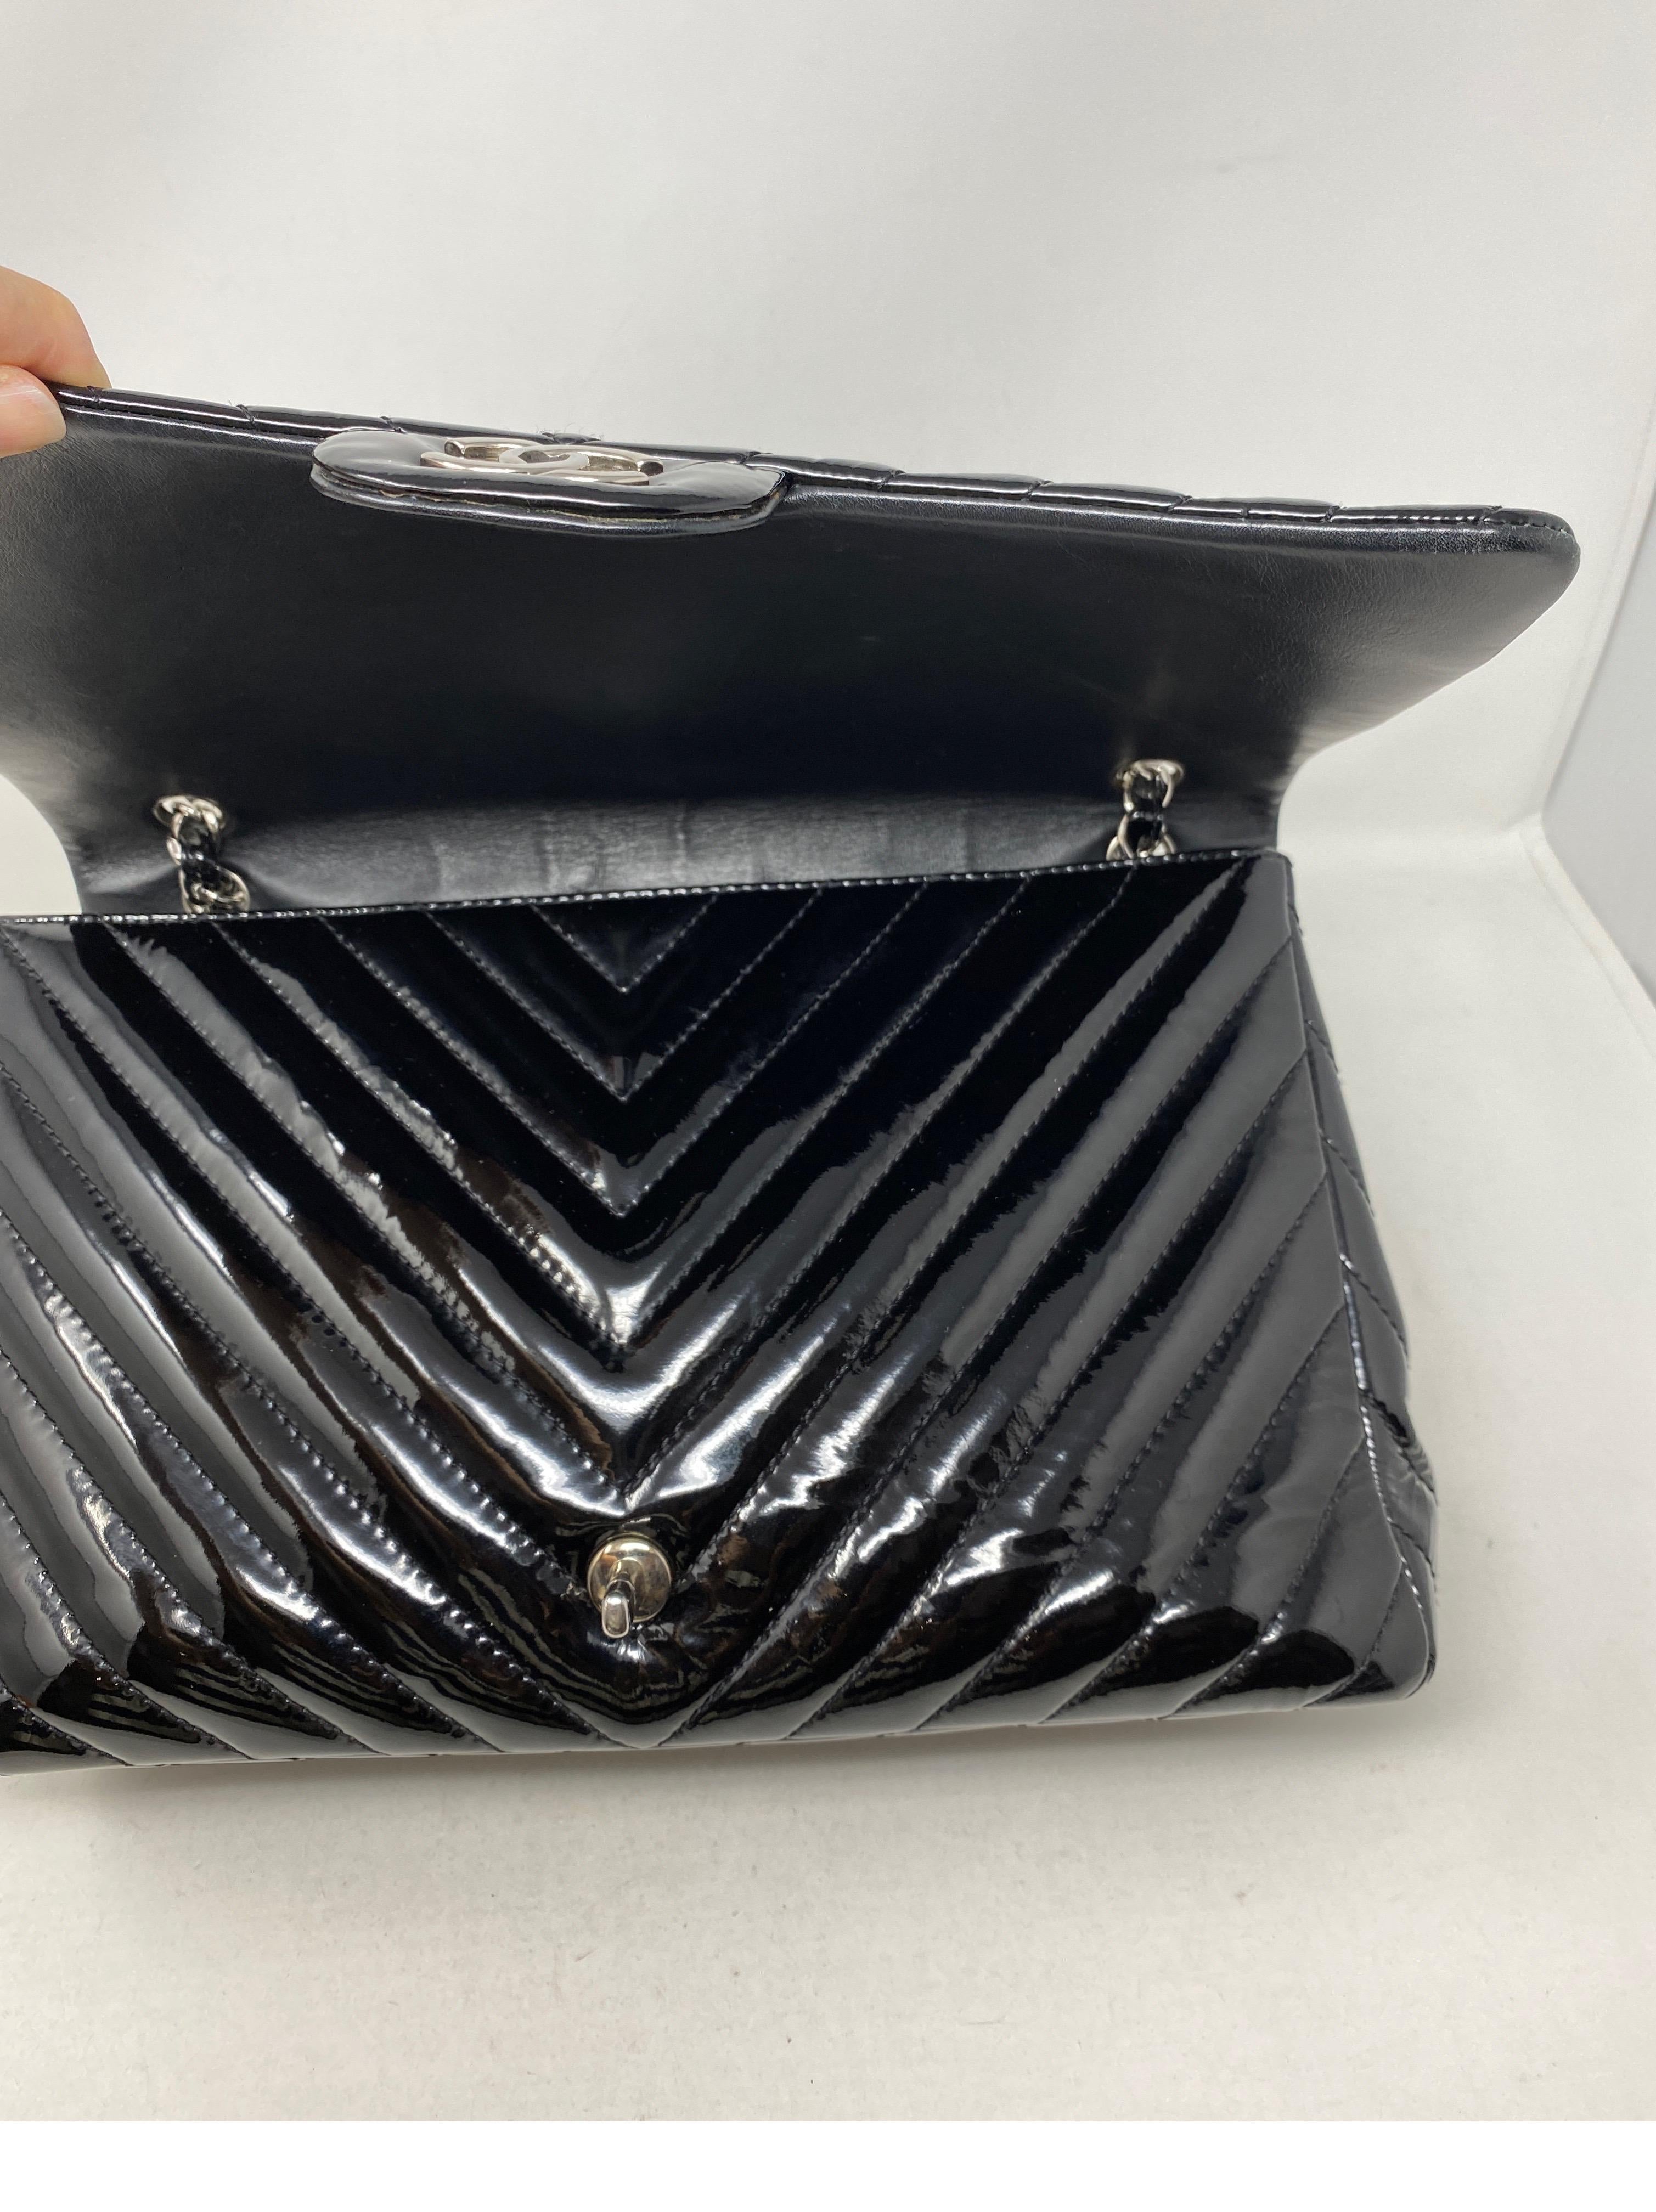 Chanel Black Jumbo Patent Leather Bag 7